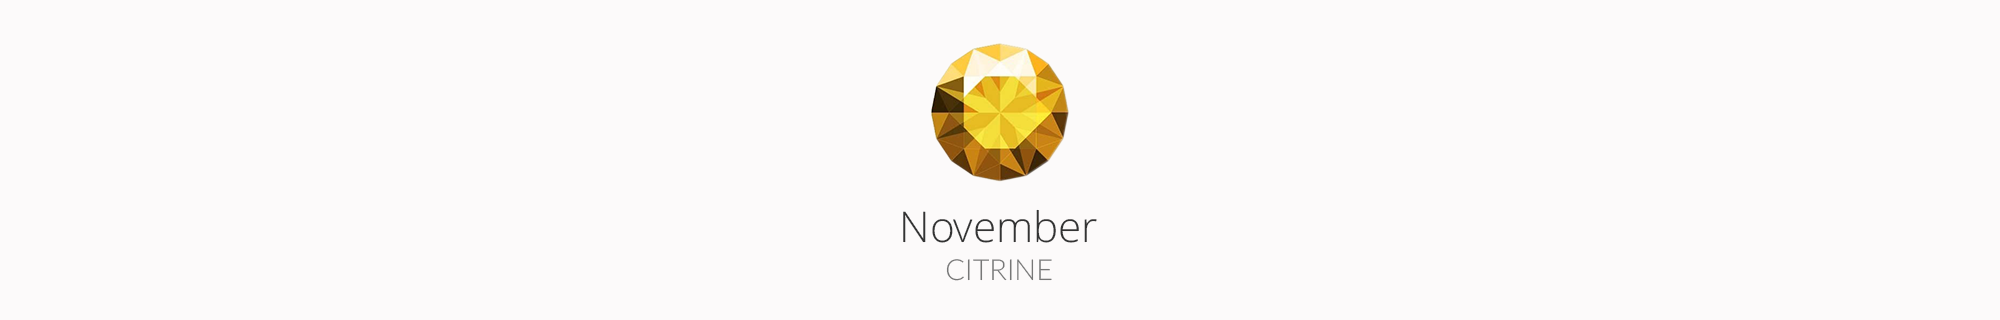 November - Citrine